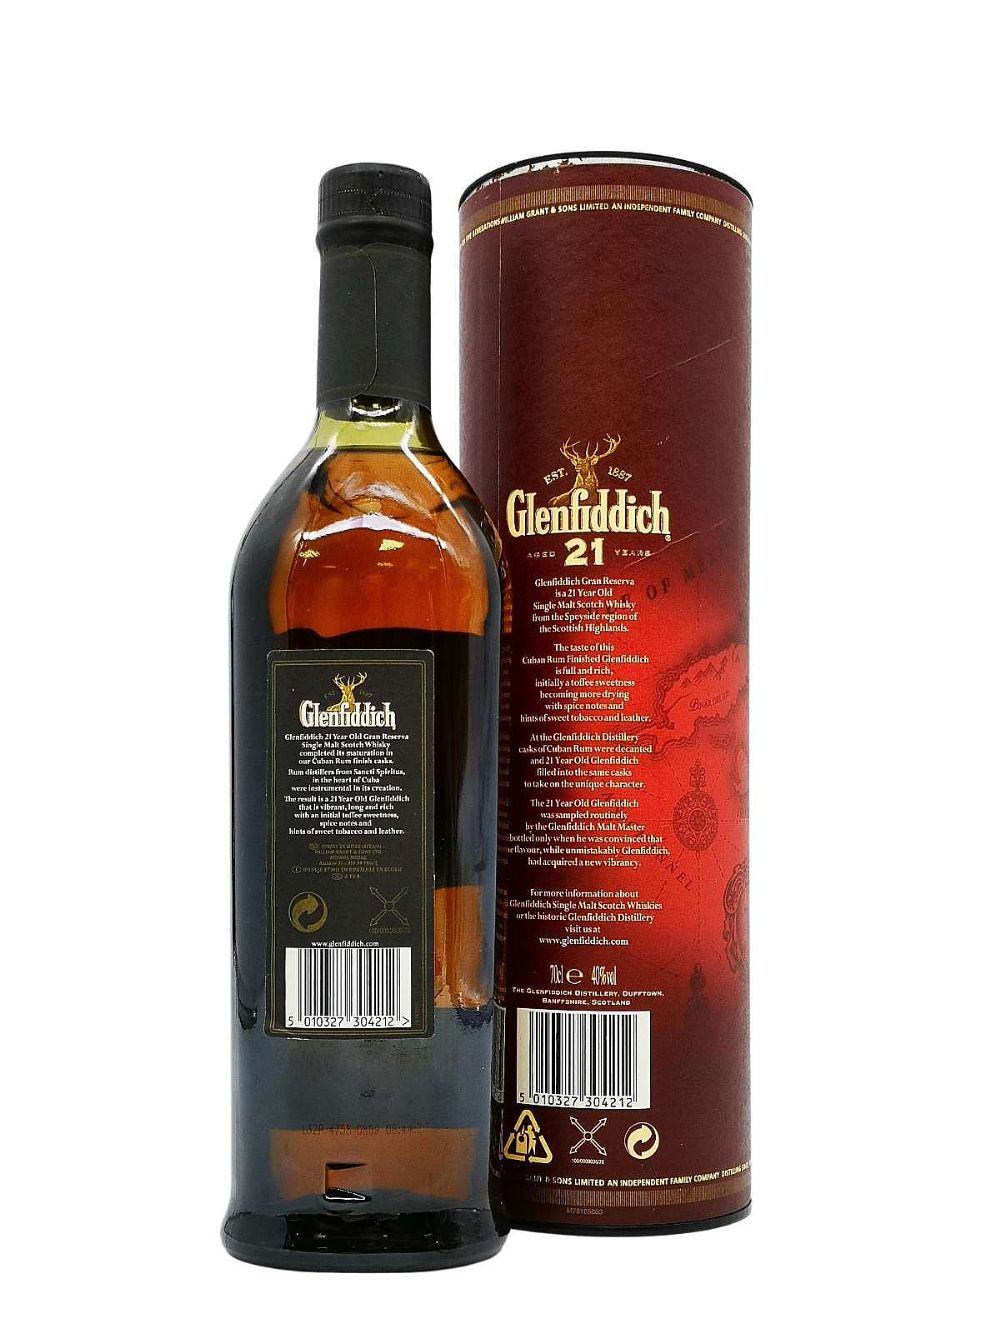 Glenfiddich 21 year old Gran Reserva, Cuban Rum Finish